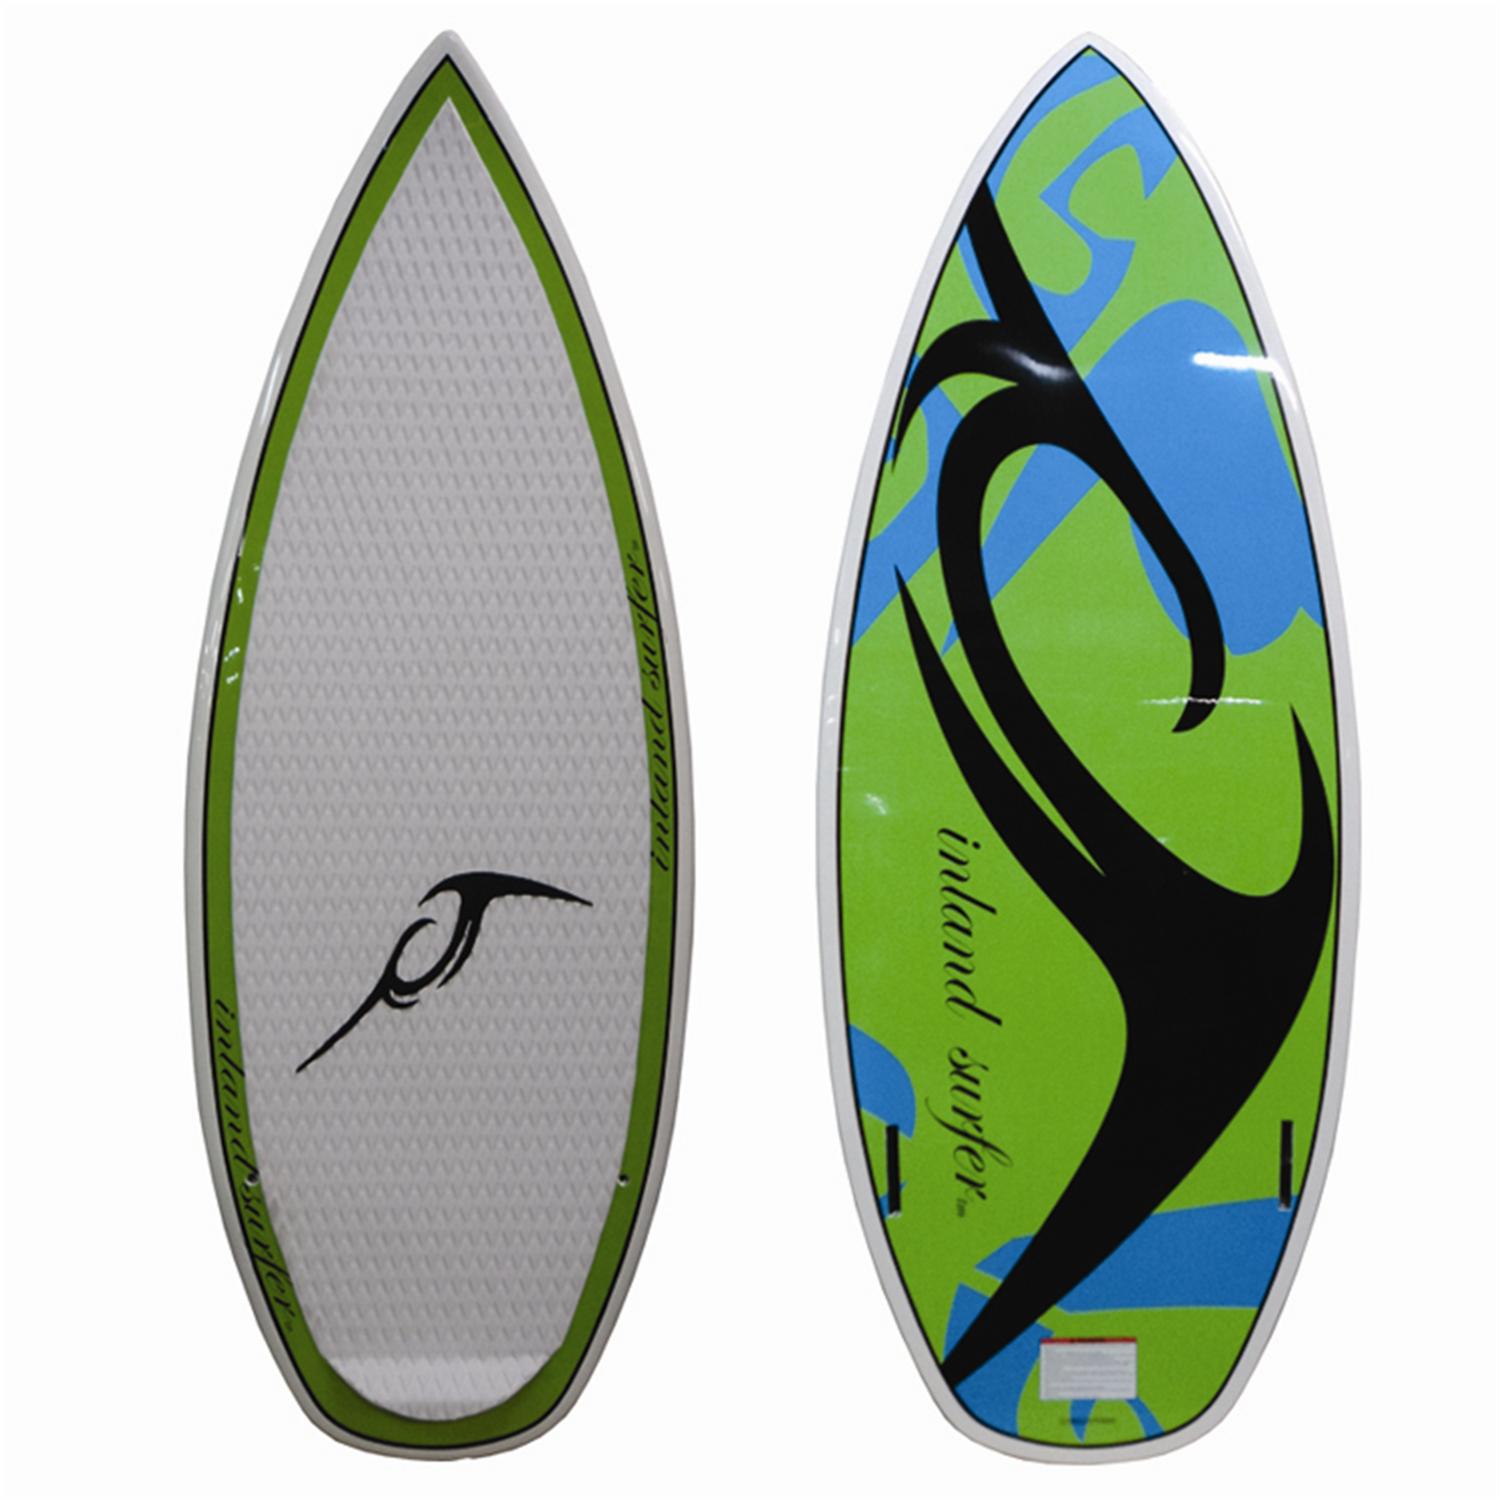 Surfing Board - ClipArt Best